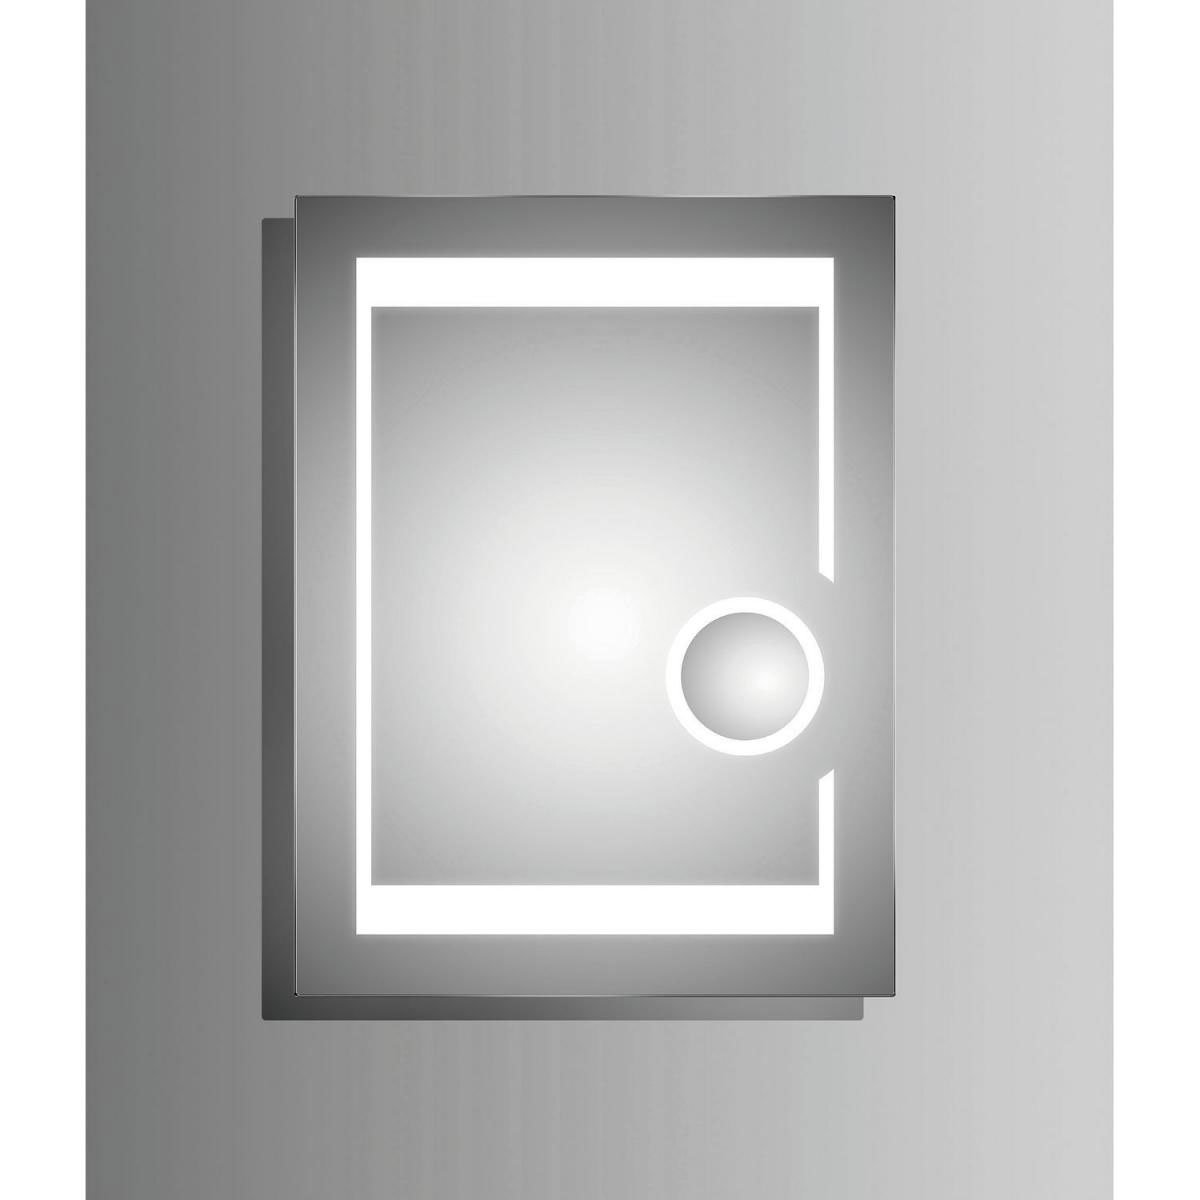 Valblue LED Spiegel Frame ca 60 x 80 cm Touch-Sensor dimmbar